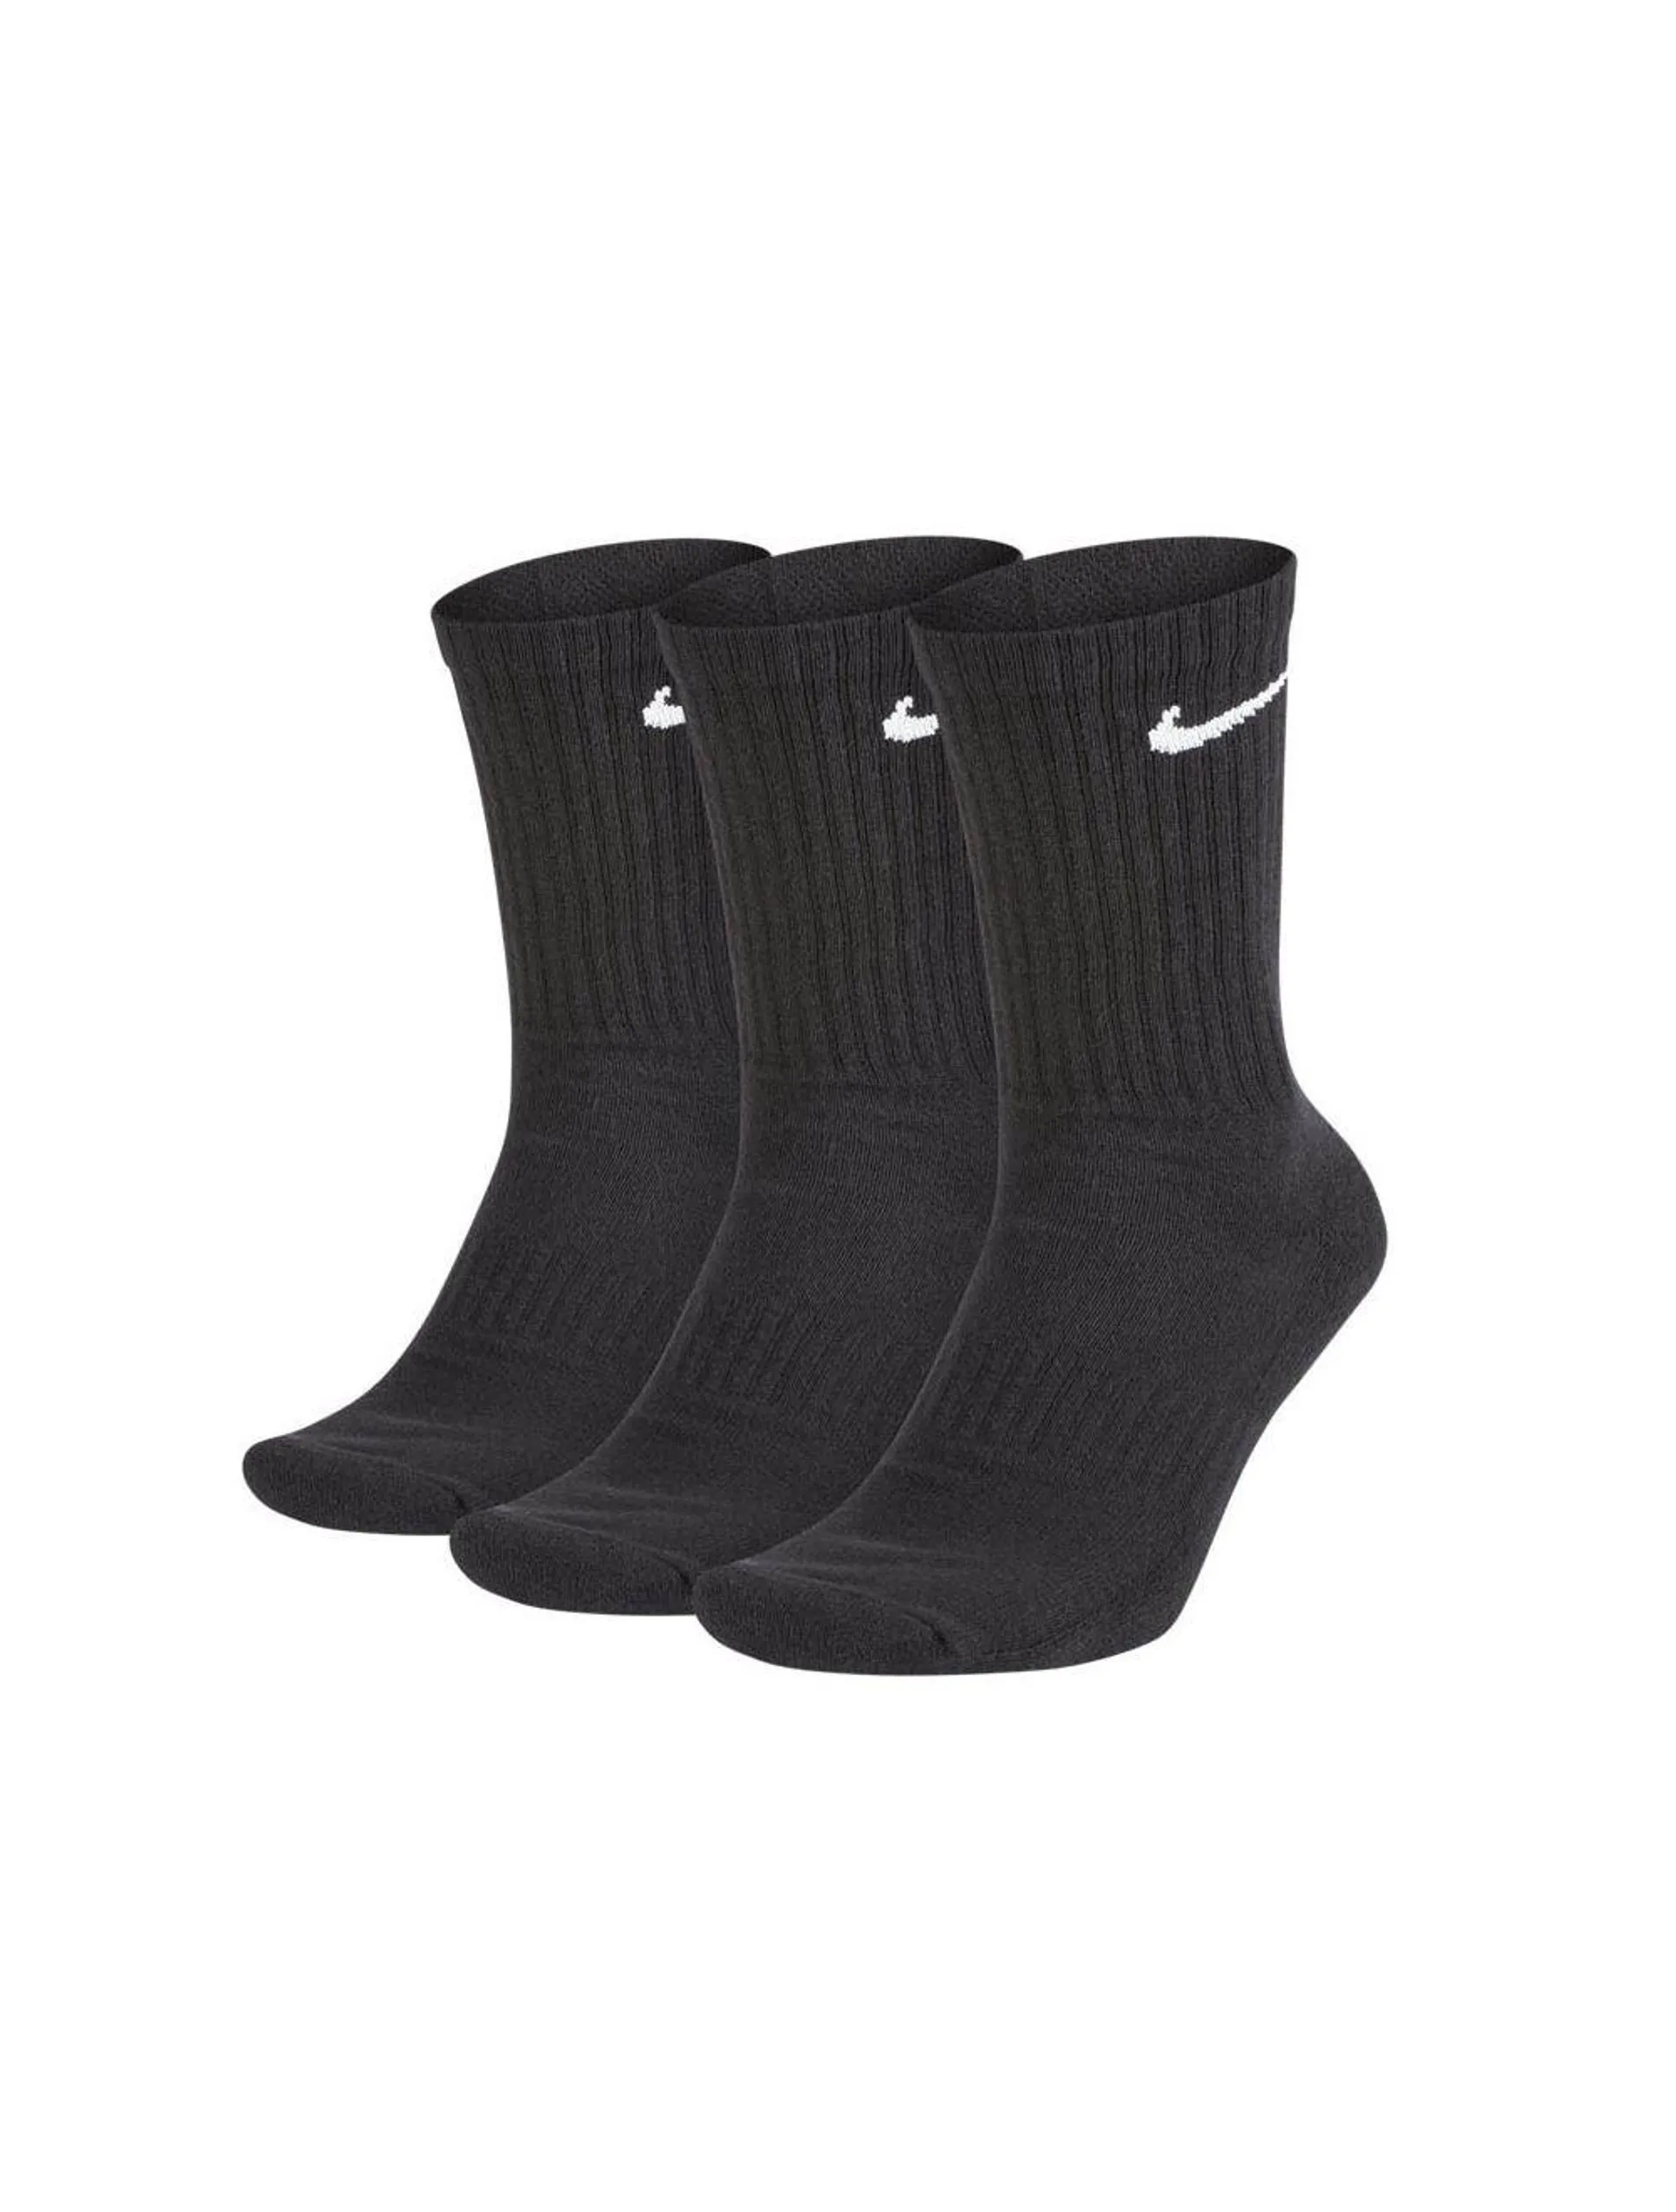 Nike Everyday Cush Crew 3 Pack Socks Black